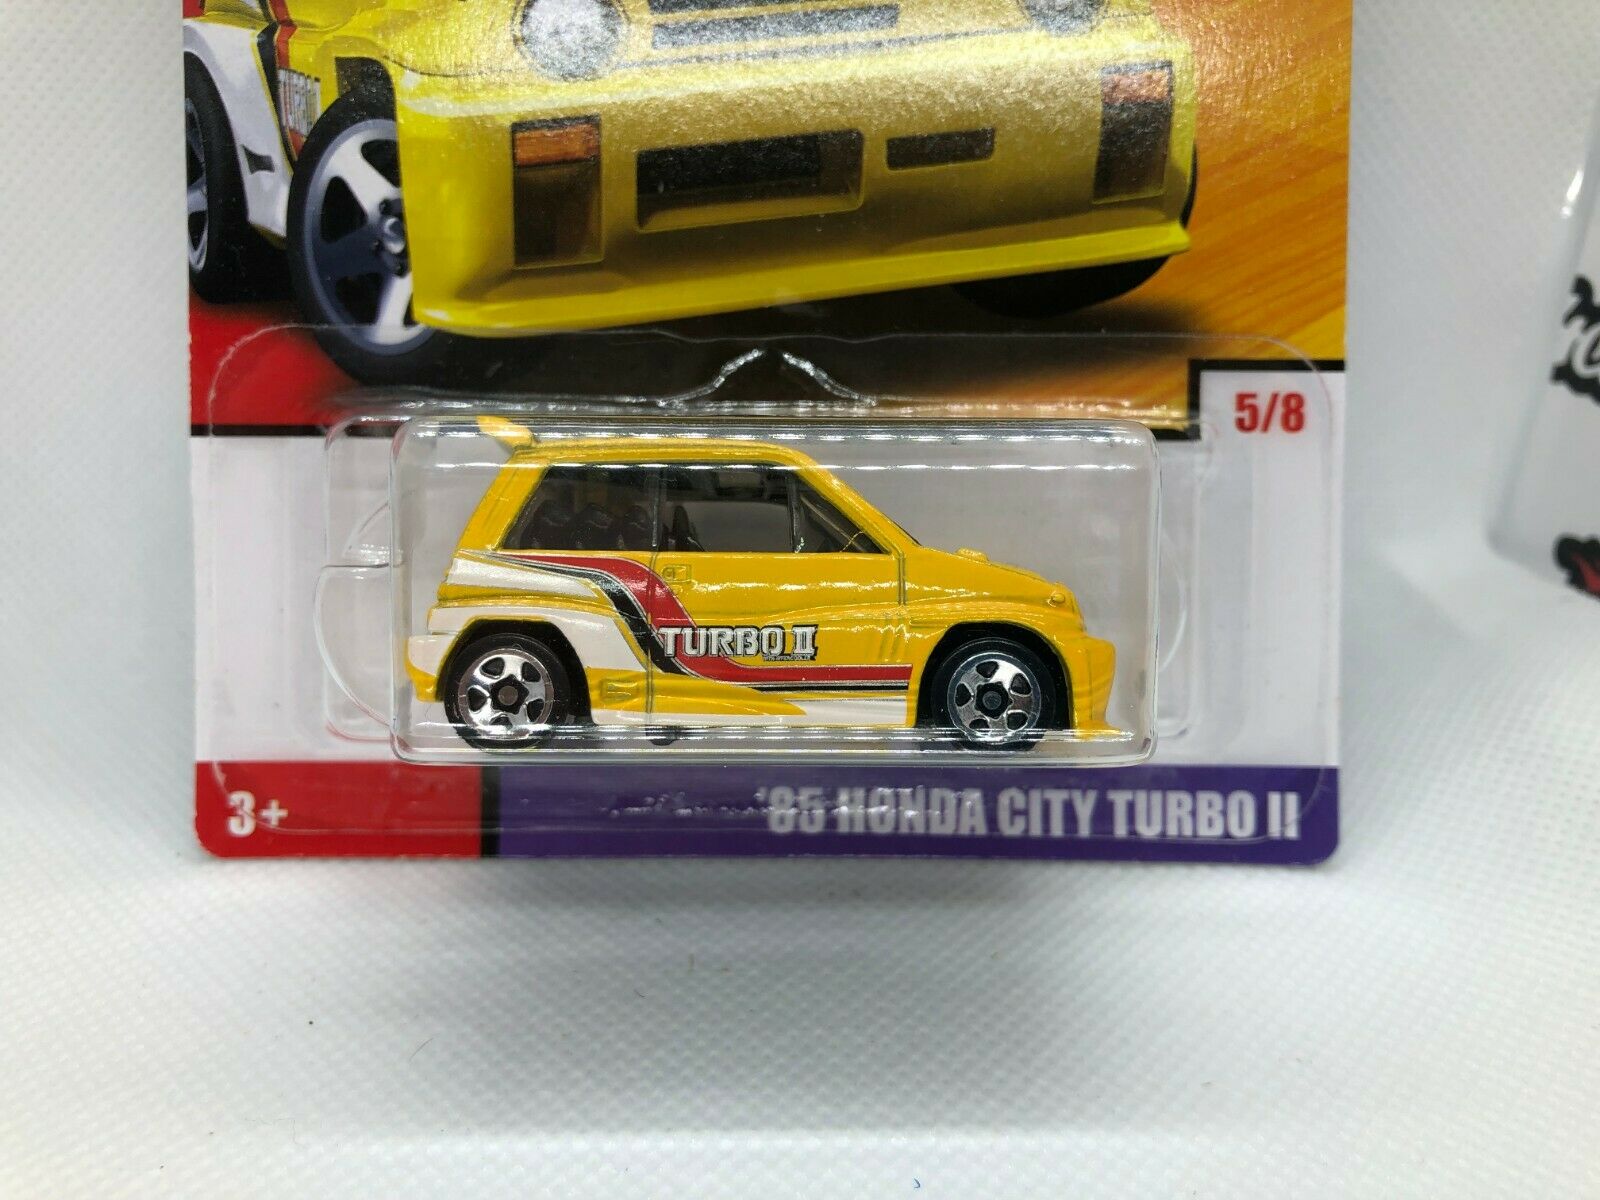 85 Honda City Turbo II